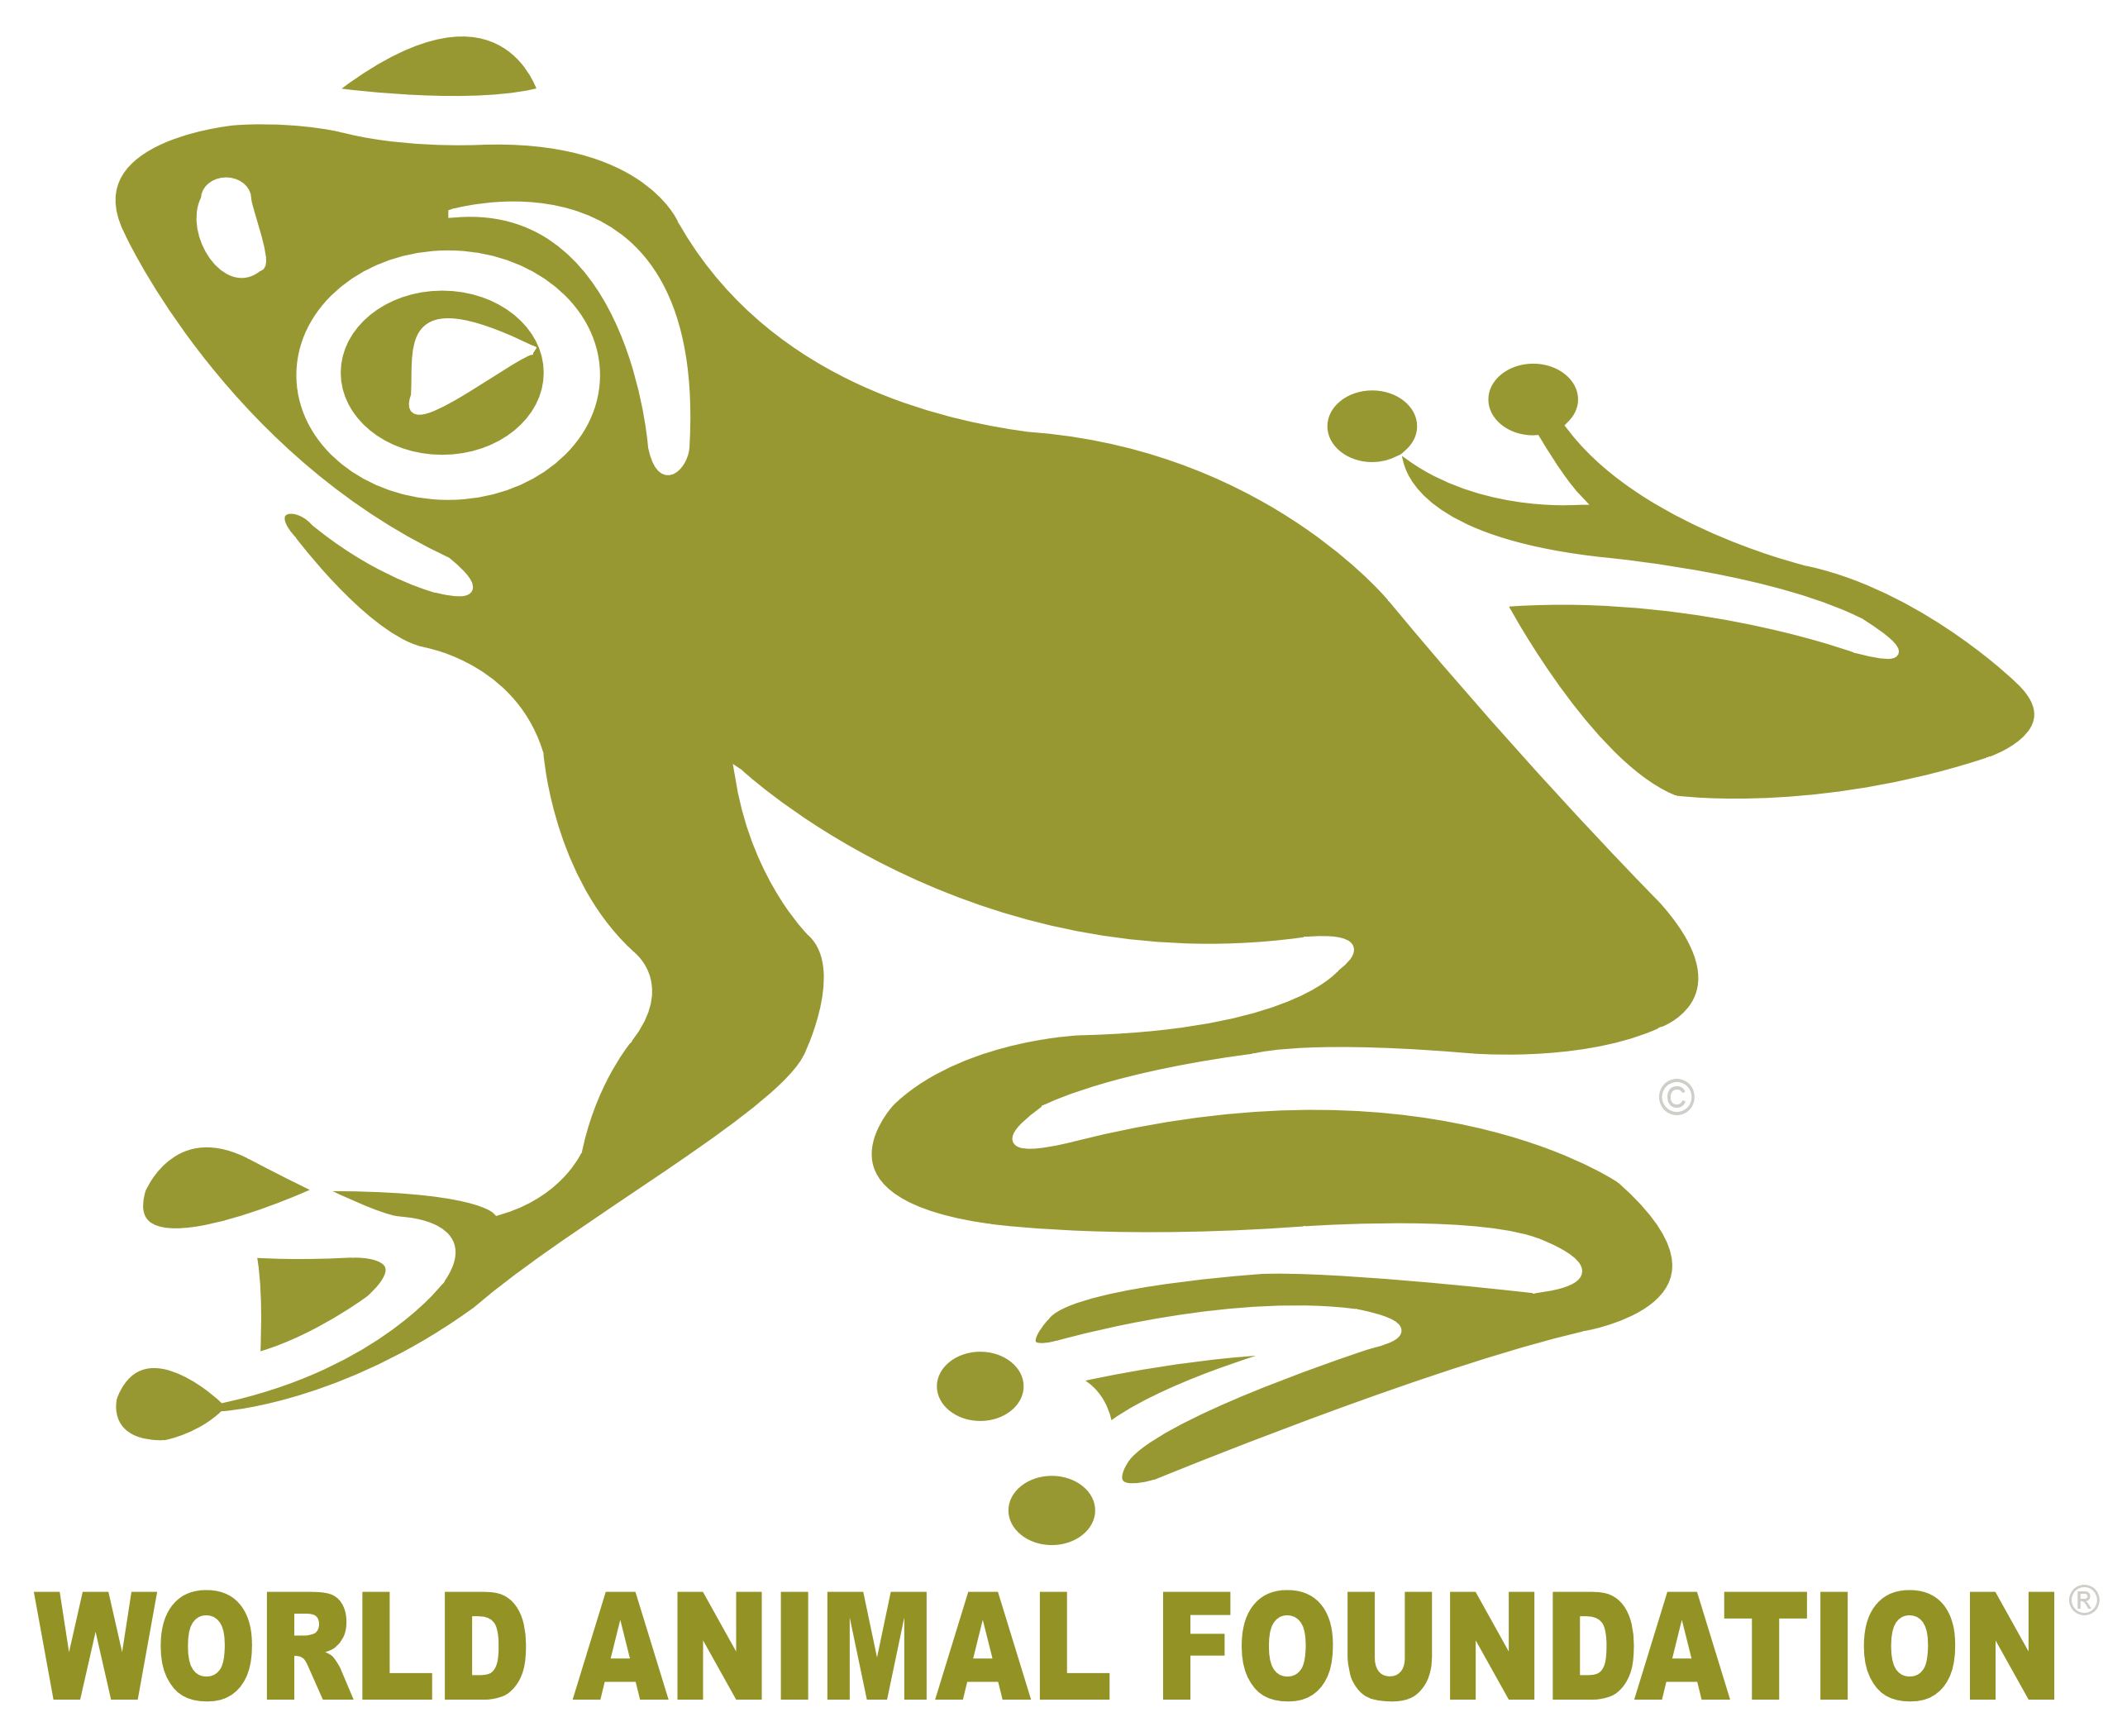 World foundation appalachian advocate. Crocodile clipart wetland animal